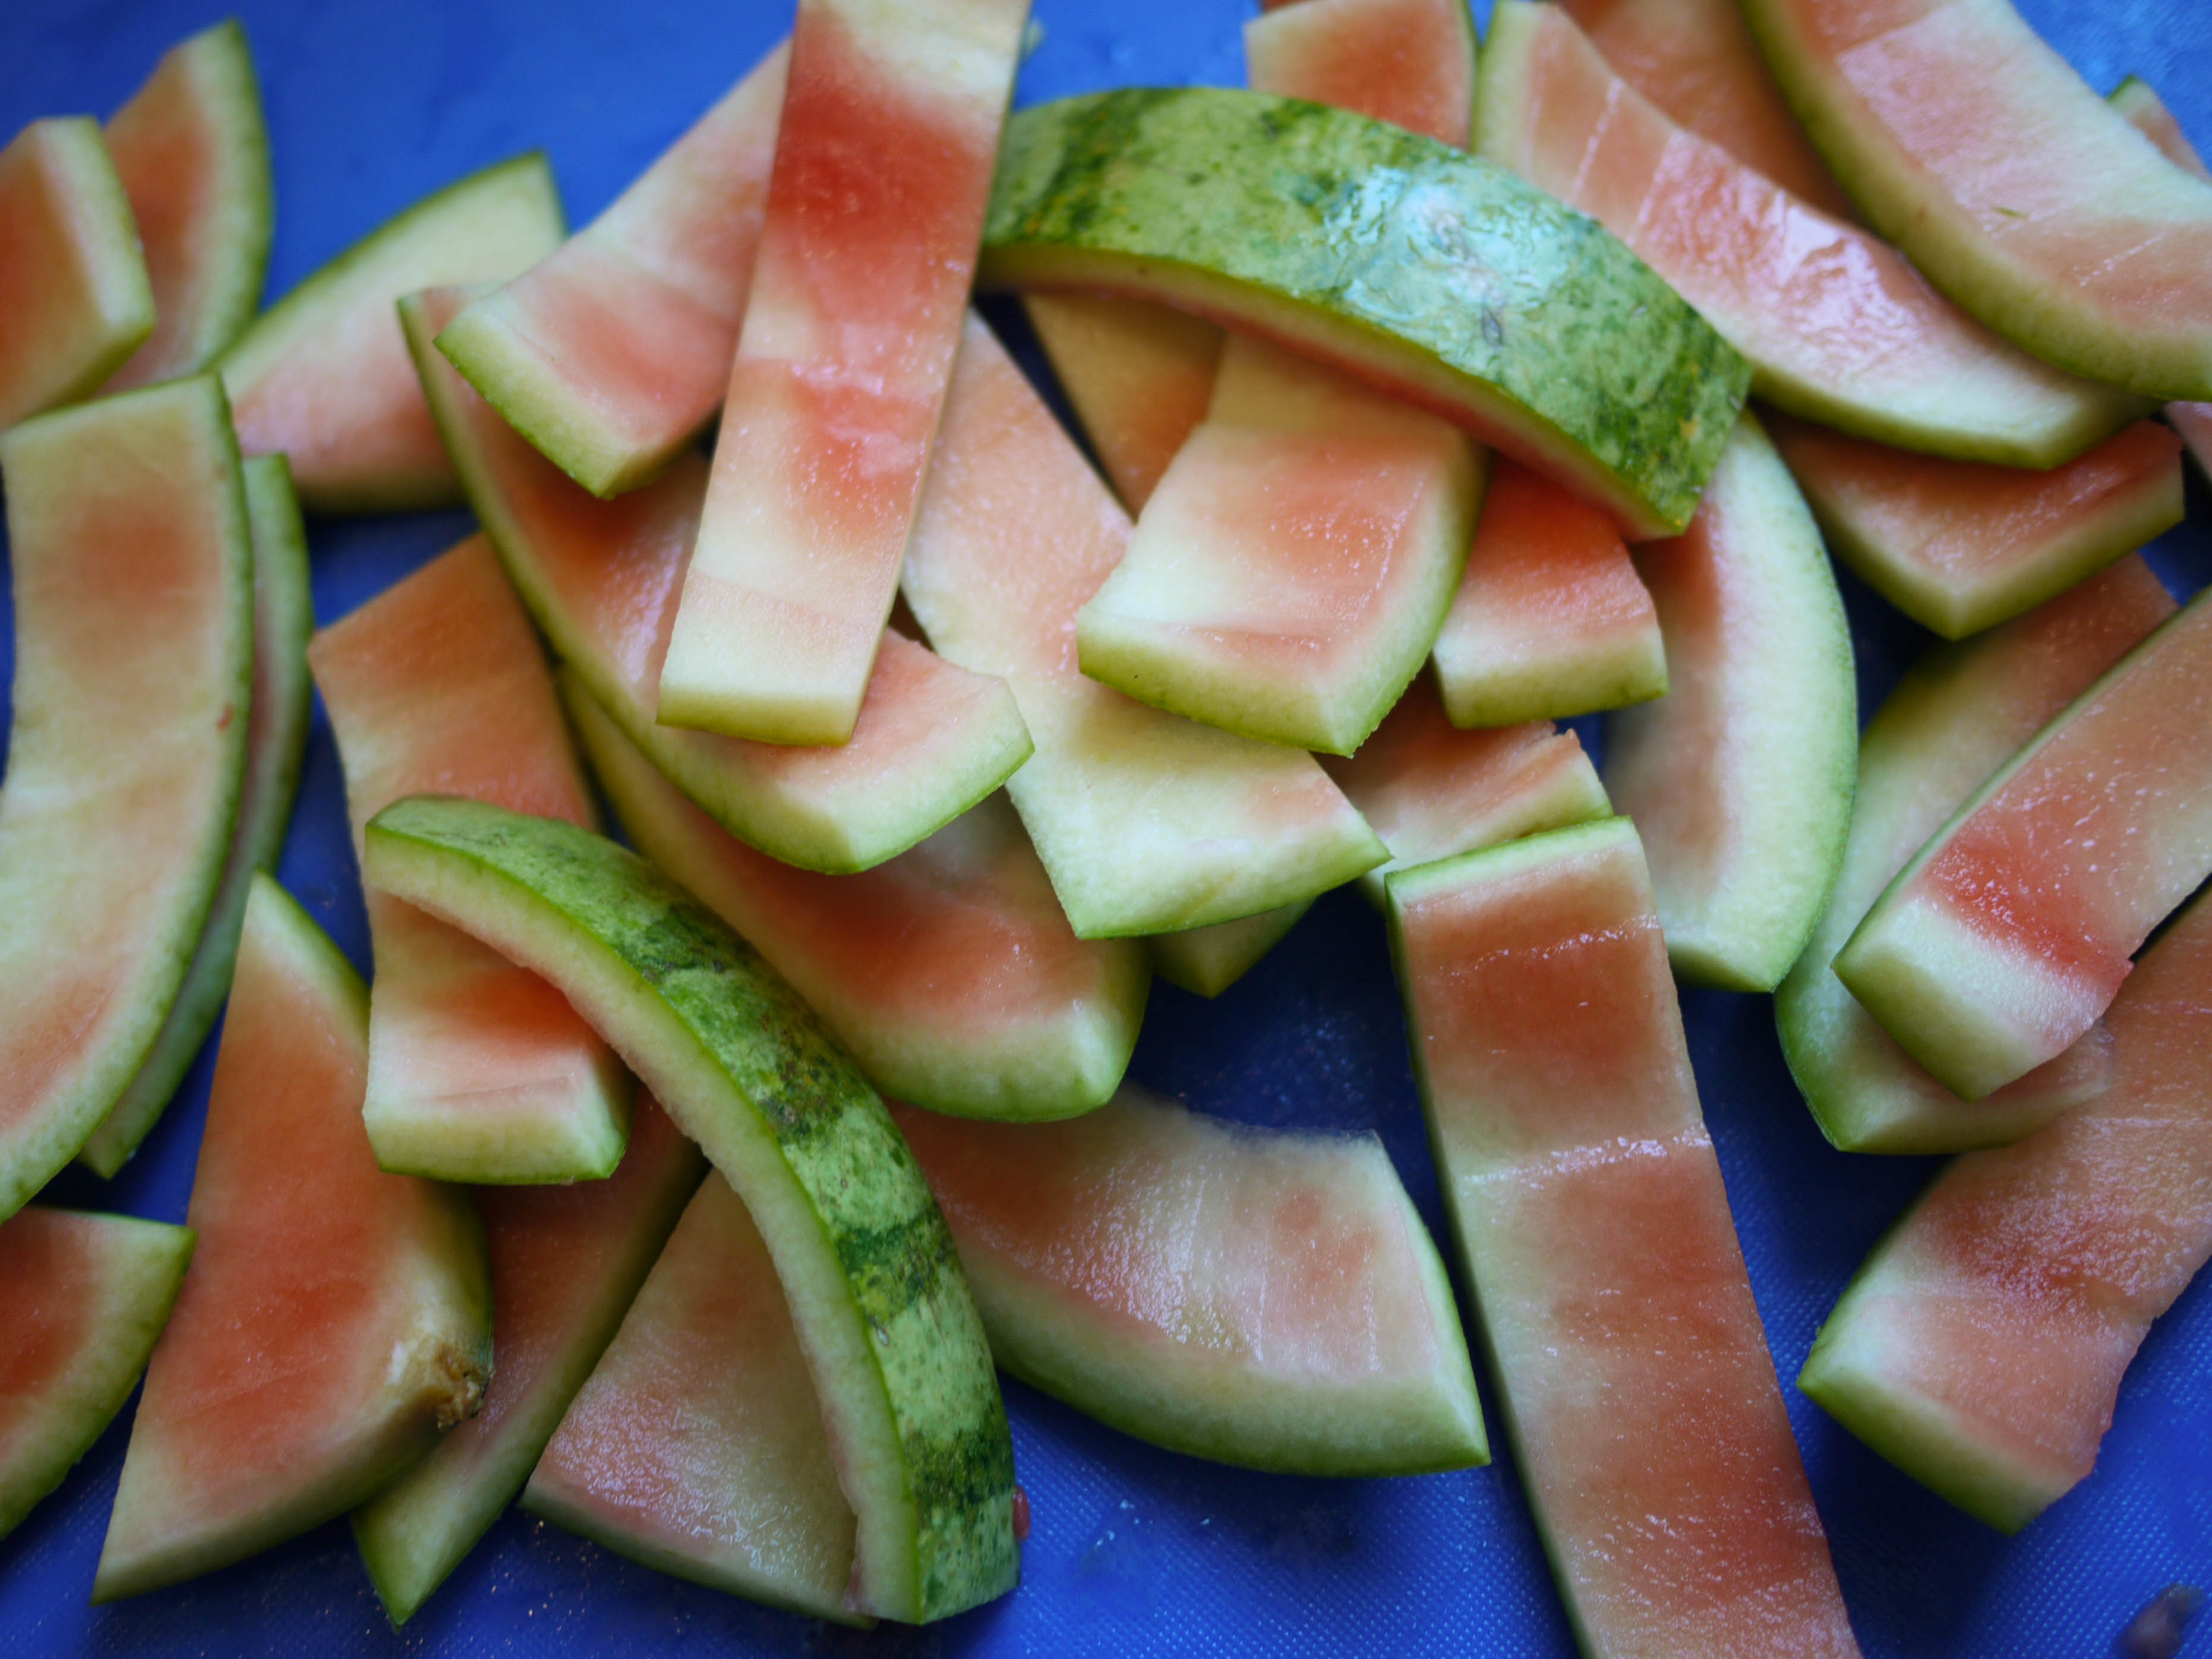 Watermelon Rind Preserves - Flesh removed